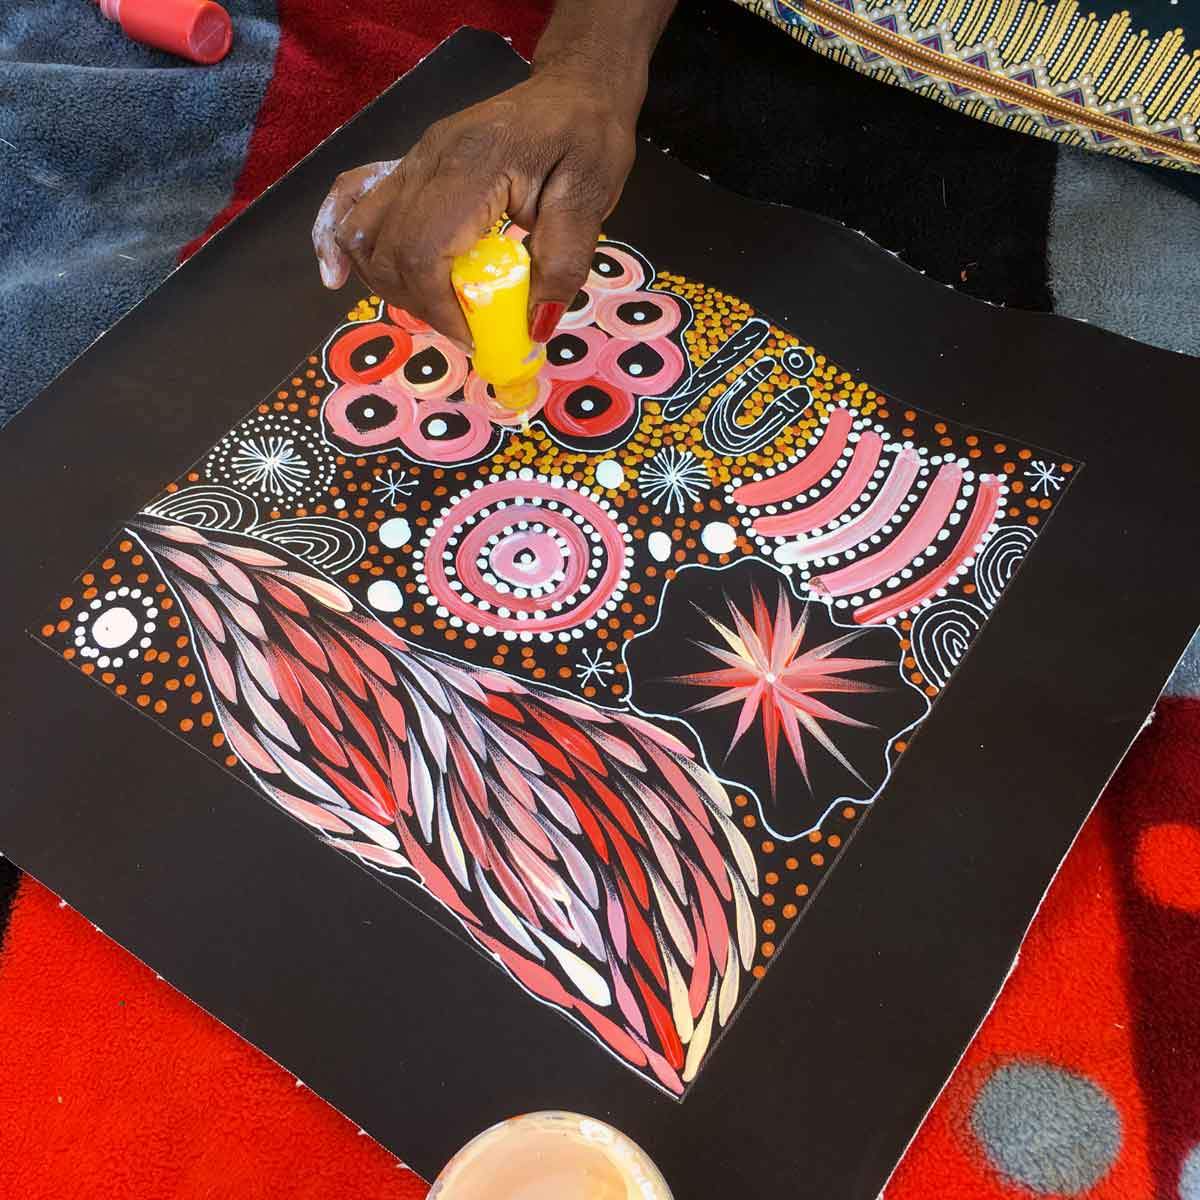 Bush Yam Story by Janet Golder Kngwarreye. Australian Aboriginal Art.